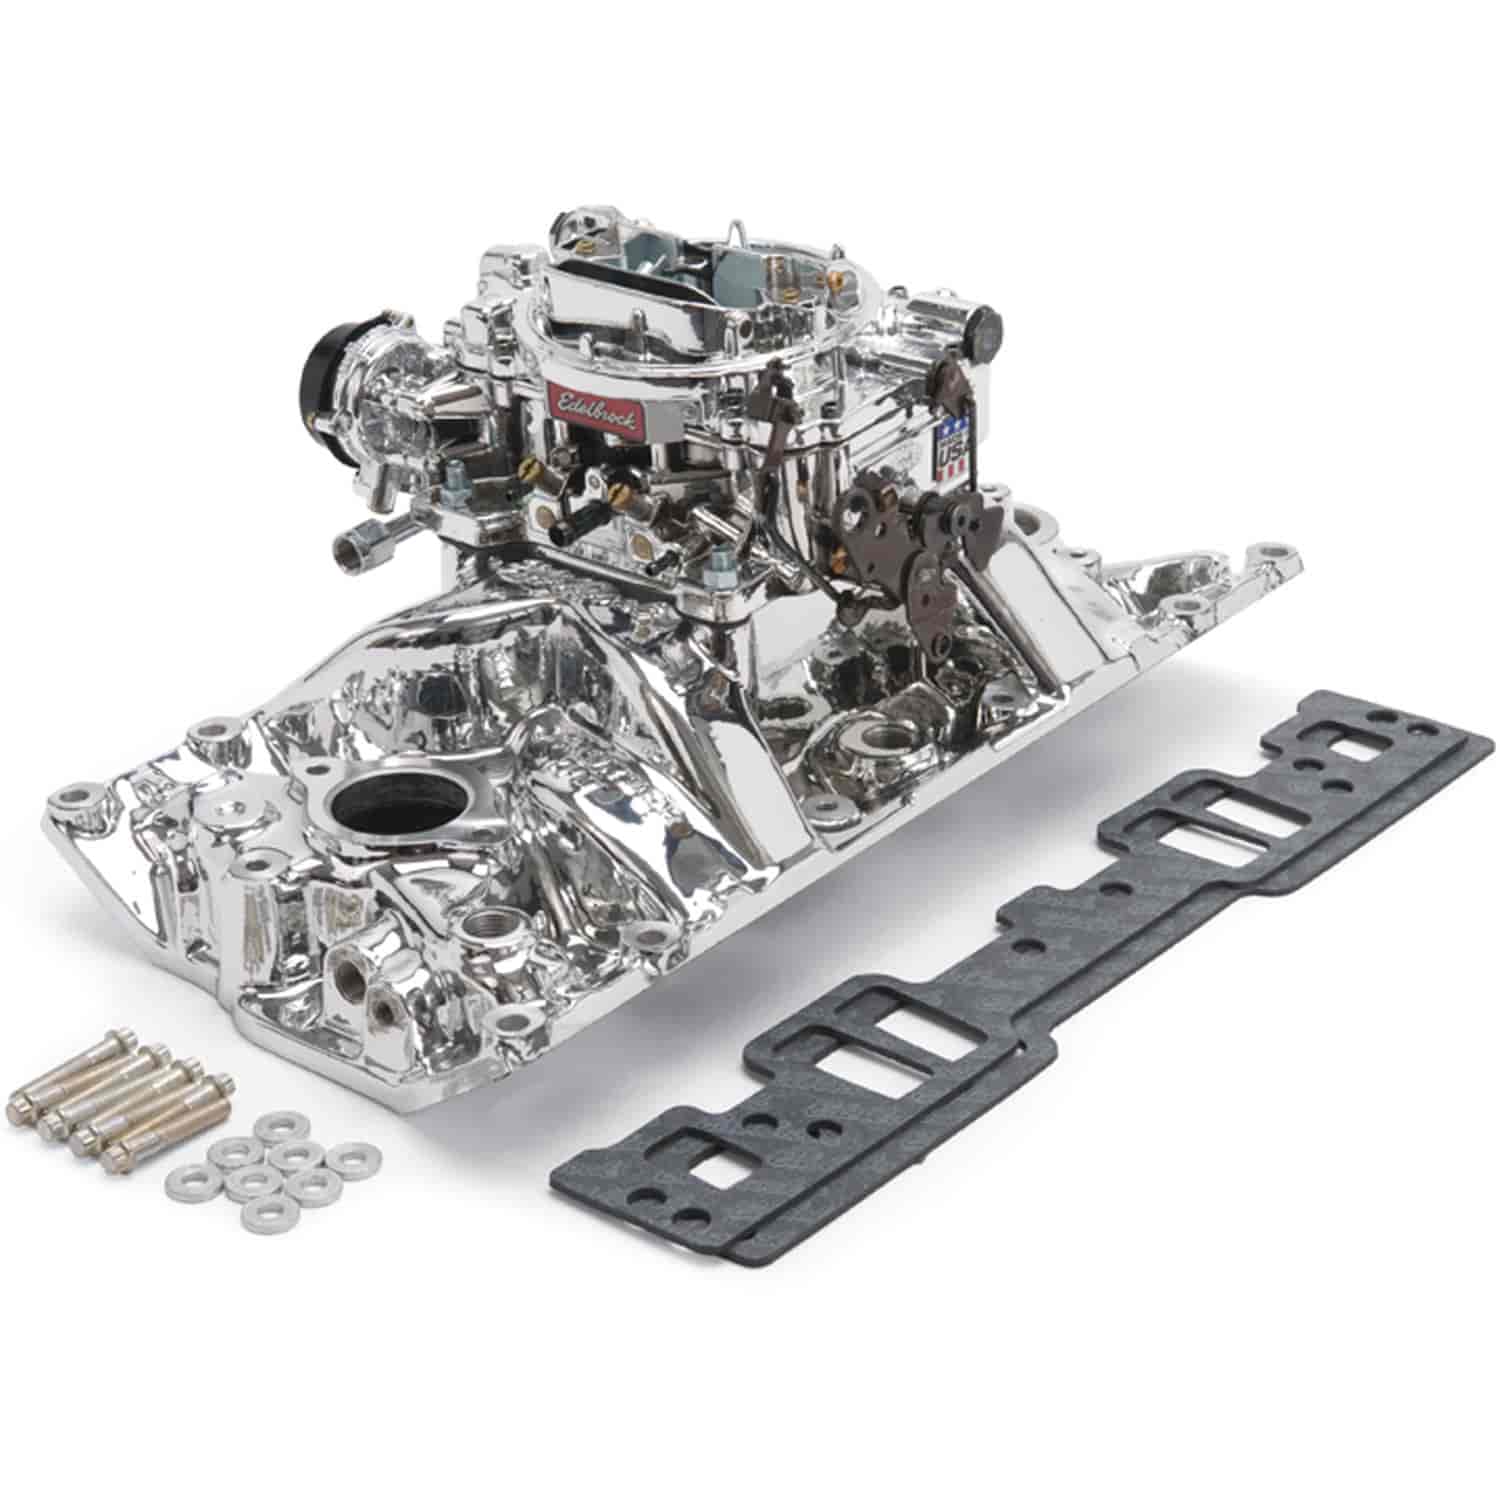 Single-Quad RPM Manifold and Carburetor Kit for Small Block Chevy Vortec/E-Tec with Endurashine Finish